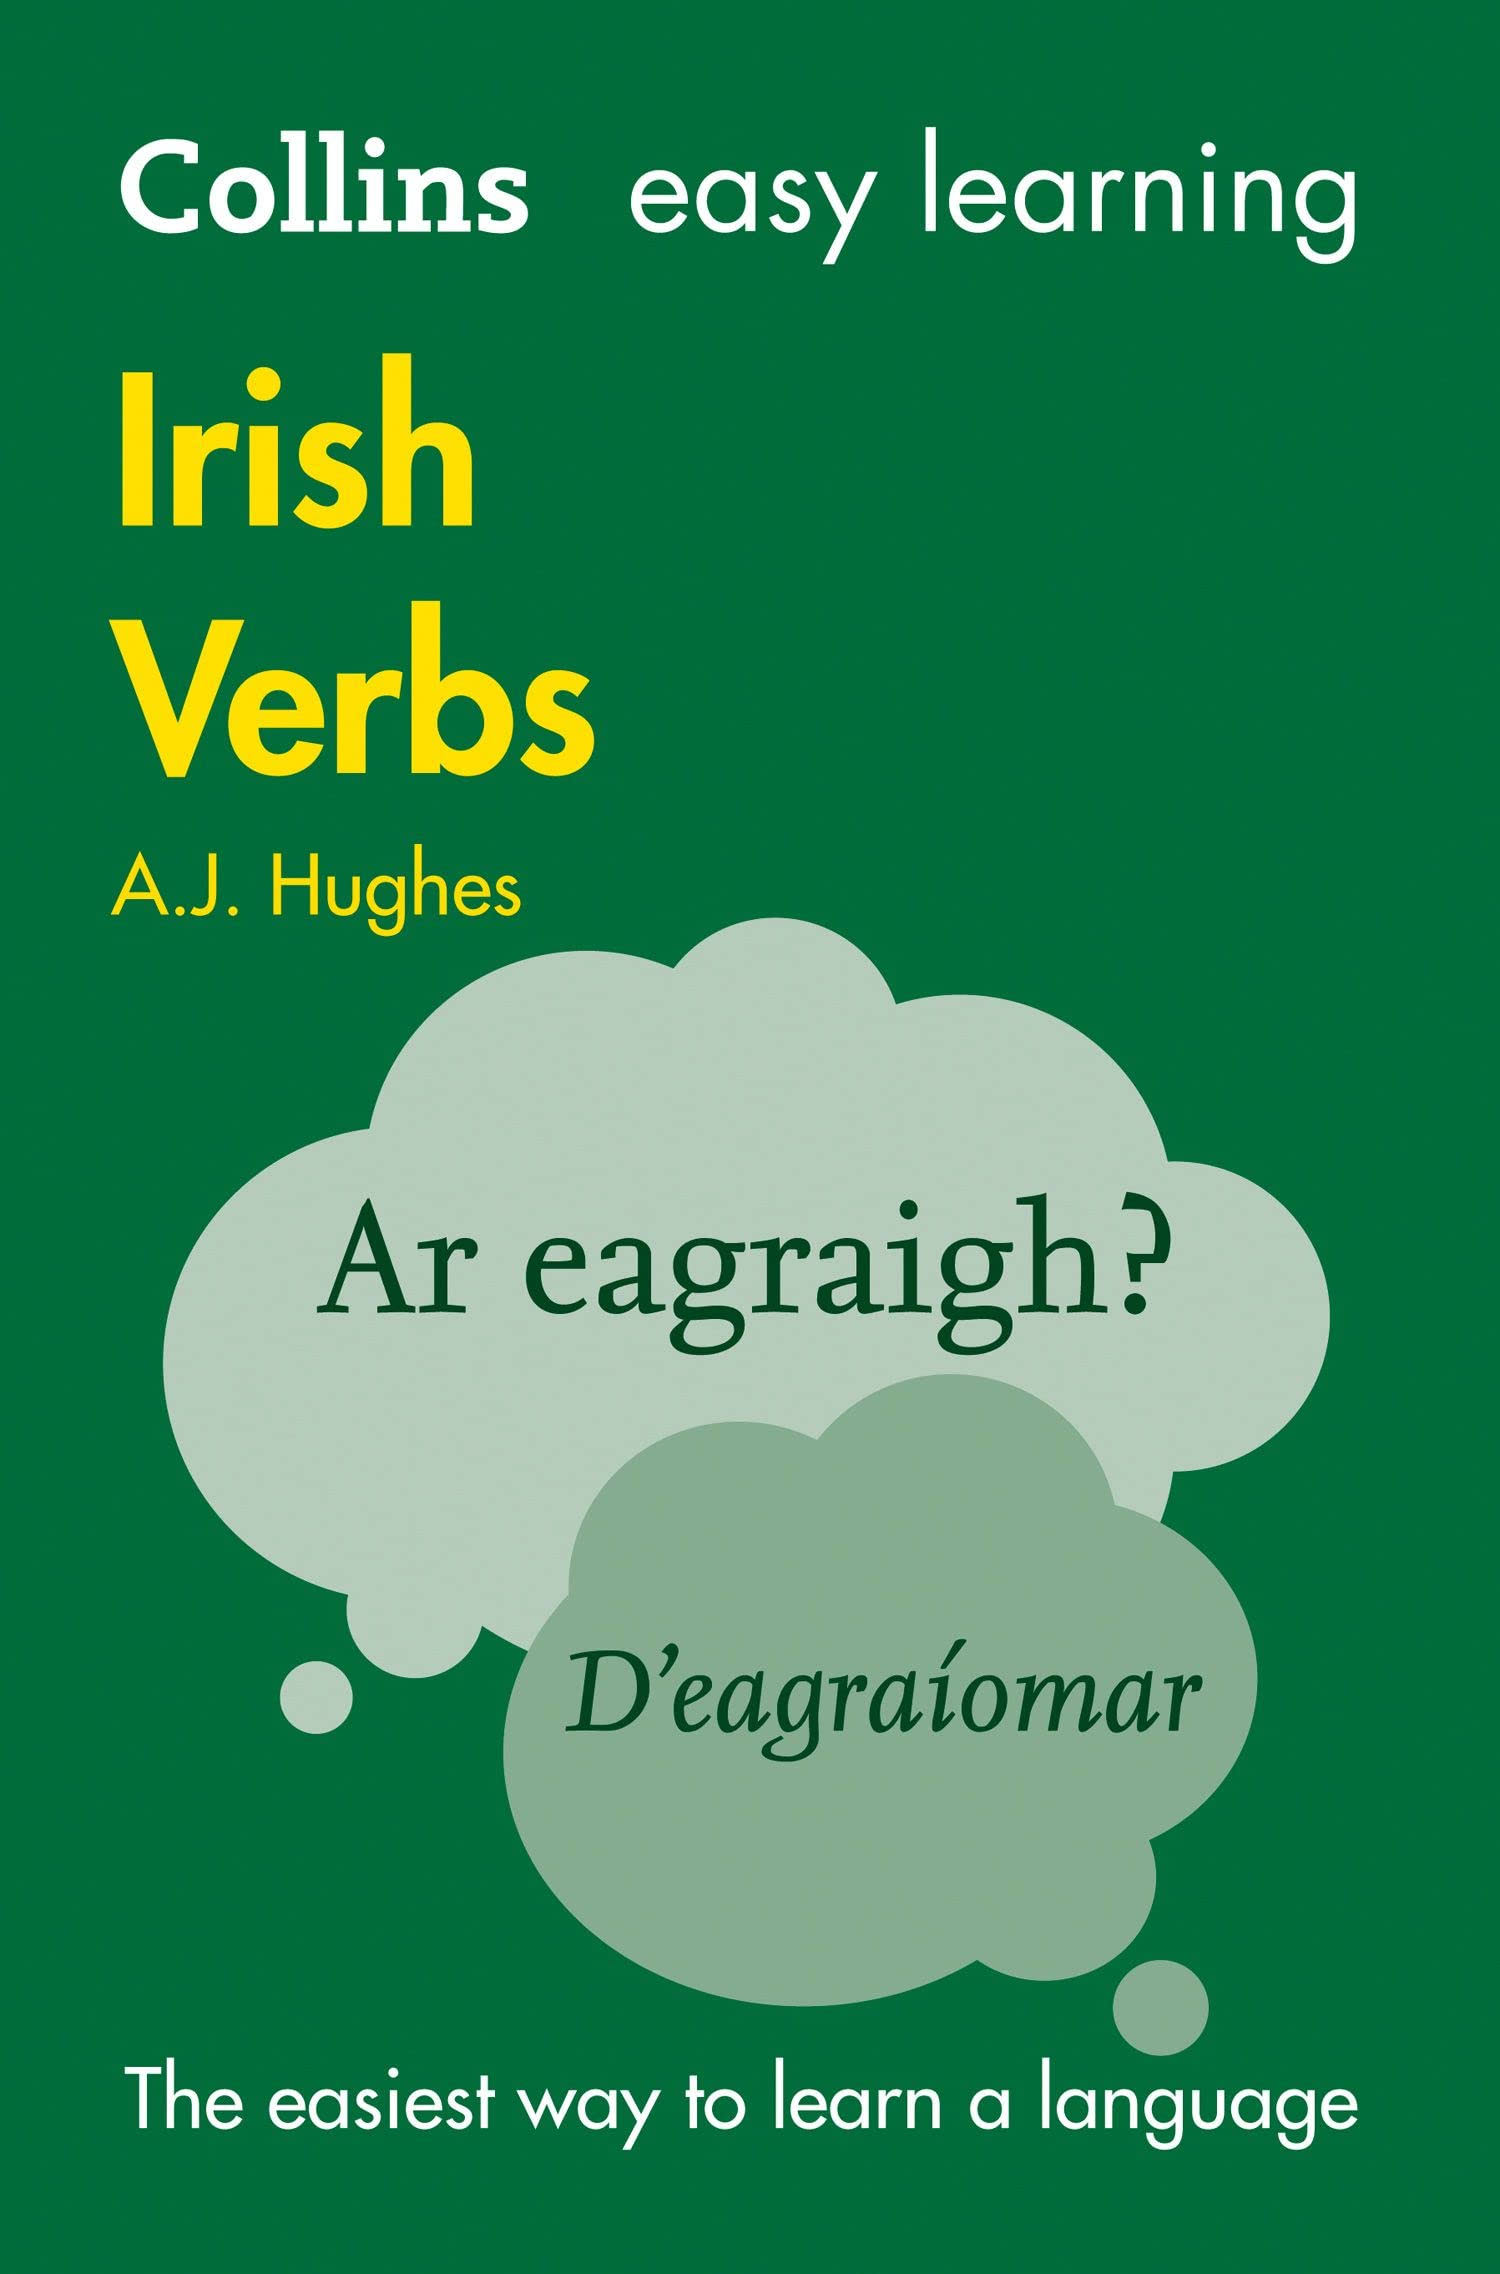 Collins Easy Learning: Irish Verbs - A.J. Hughes